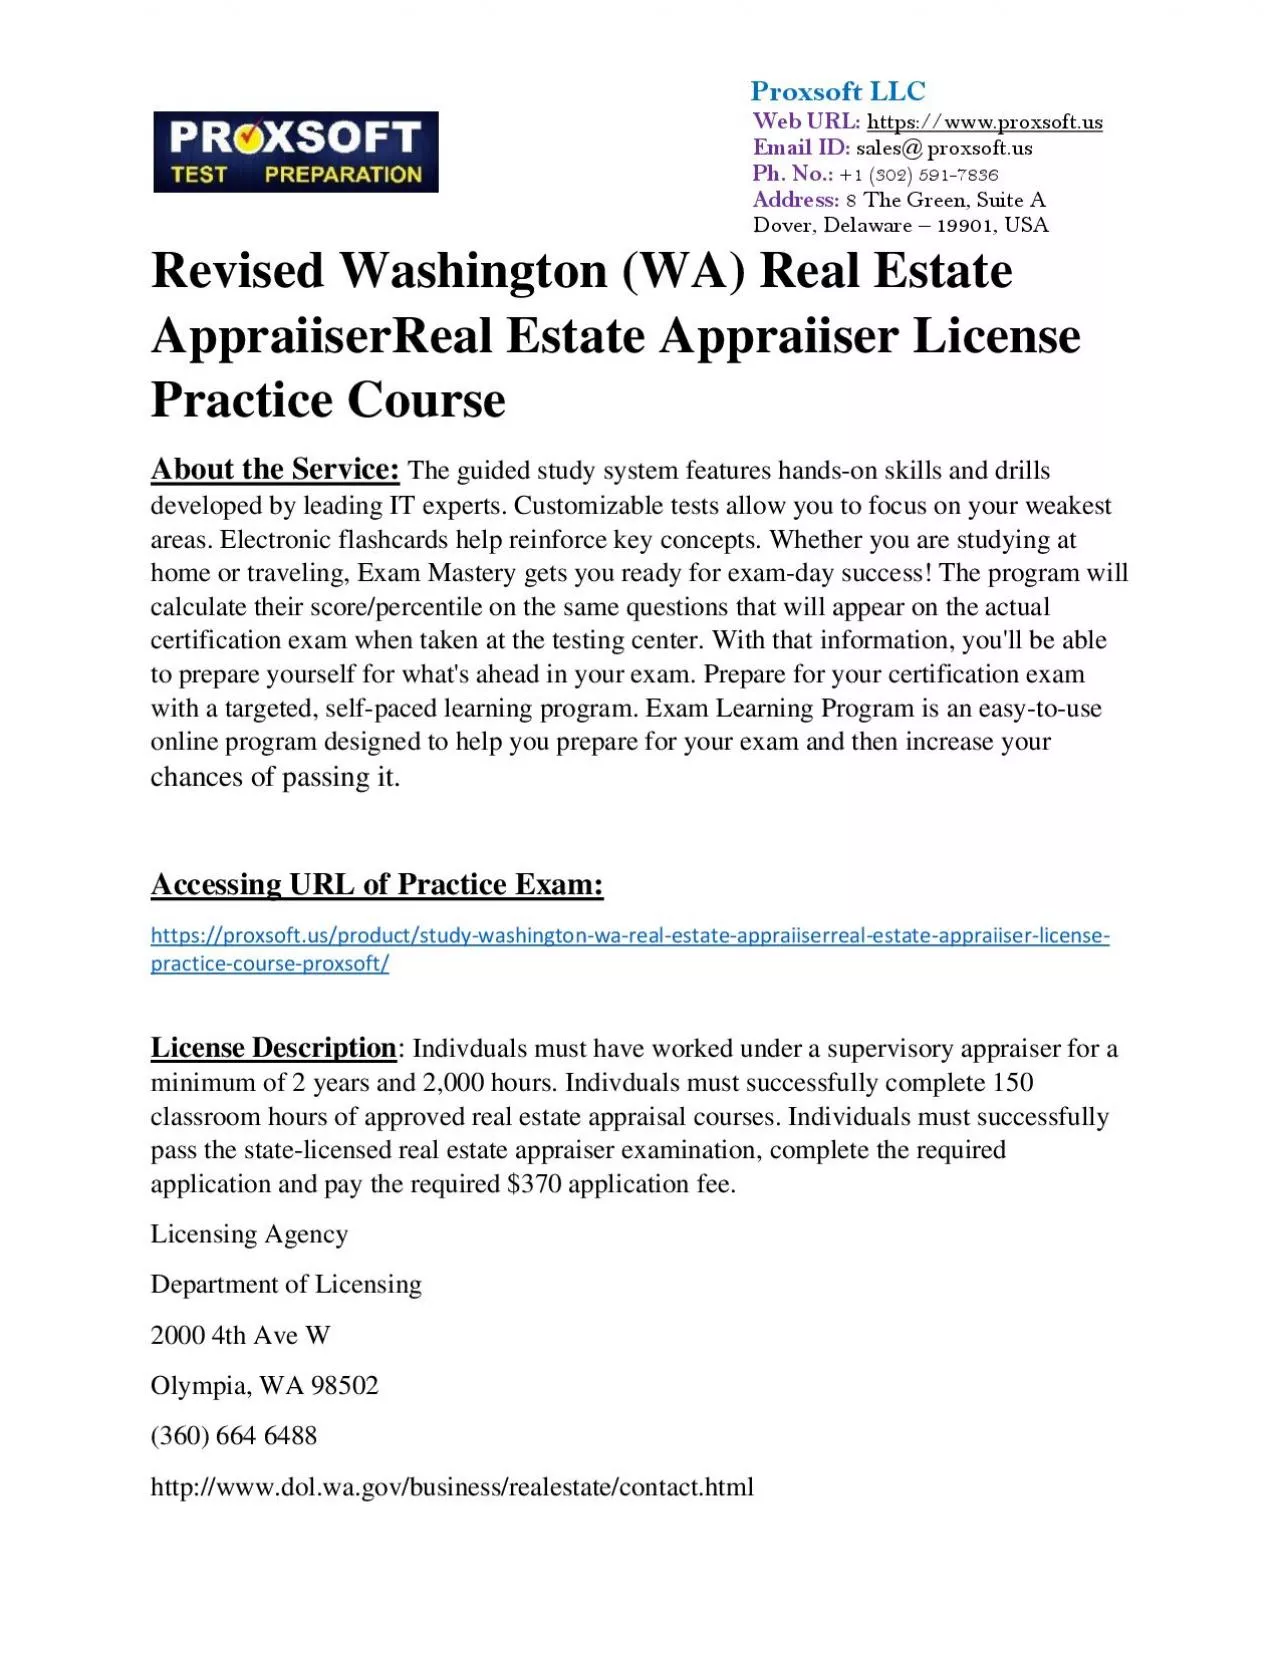 Revised Washington (WA) Real Estate AppraiiserReal Estate Appraiiser License Practice